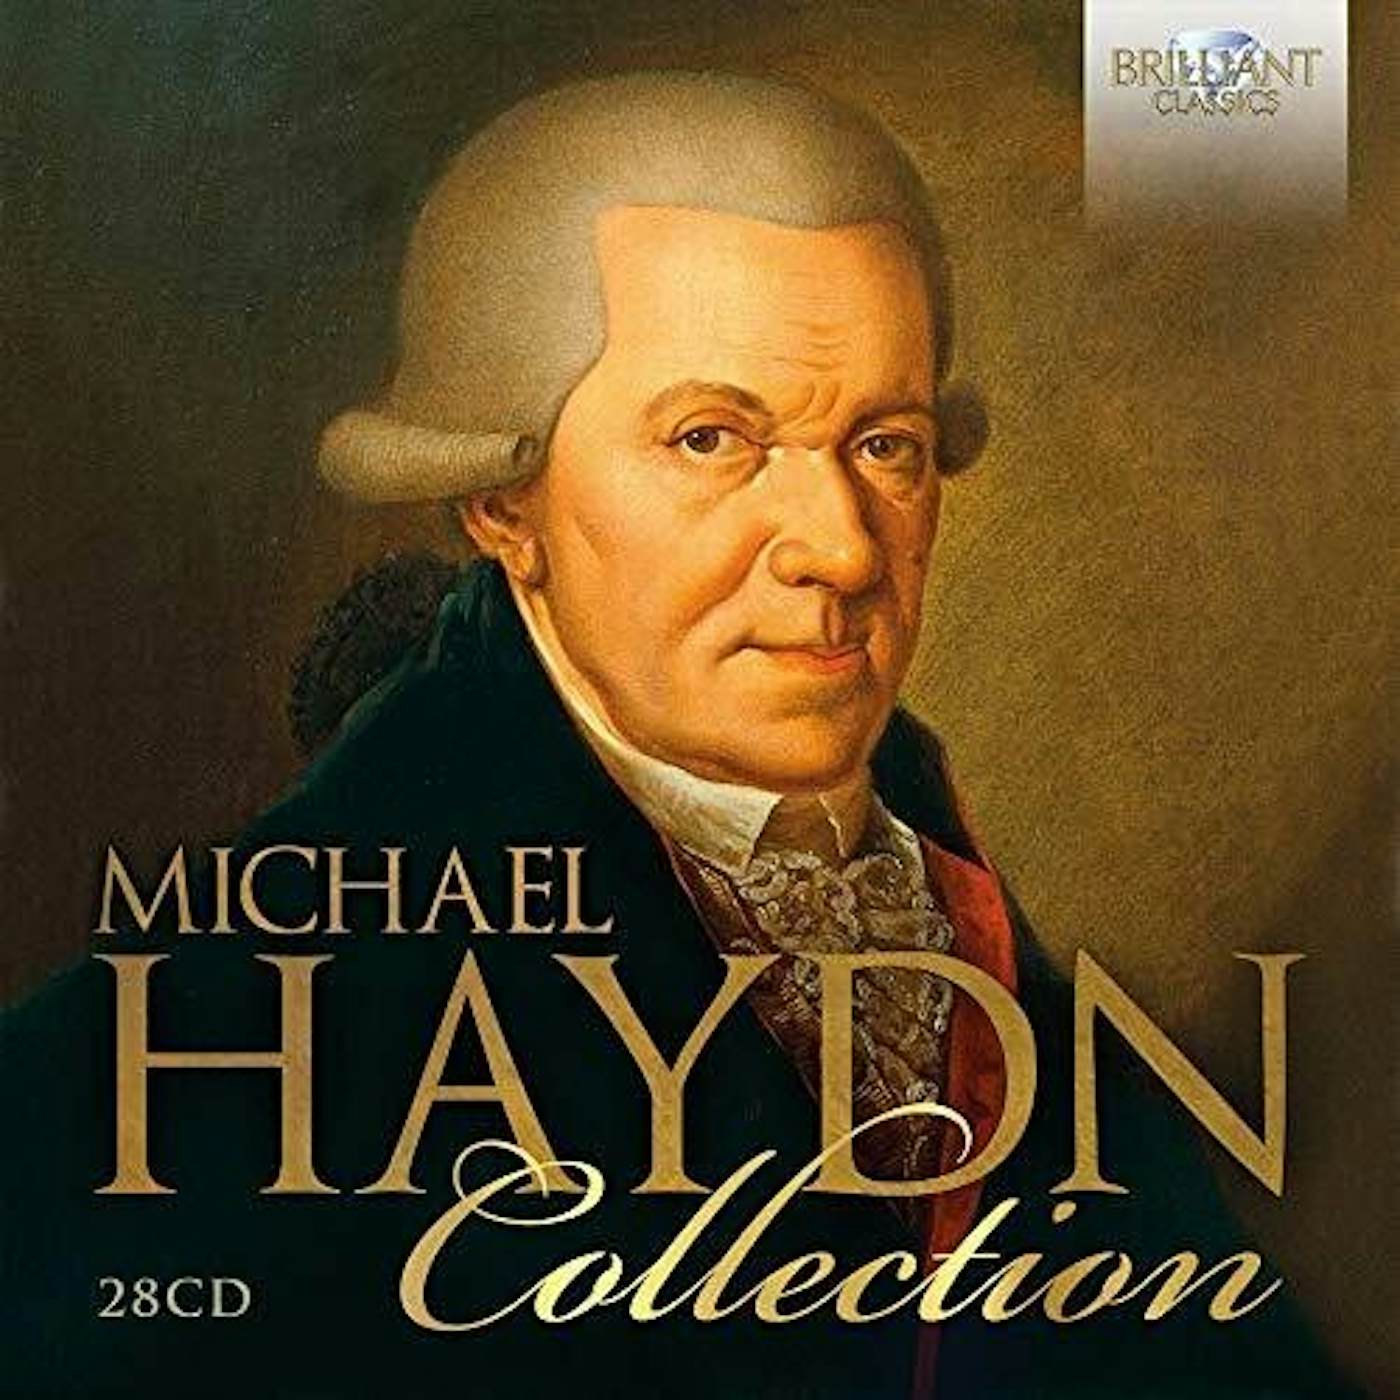 MICHAEL HAYDN COLLECTION CD